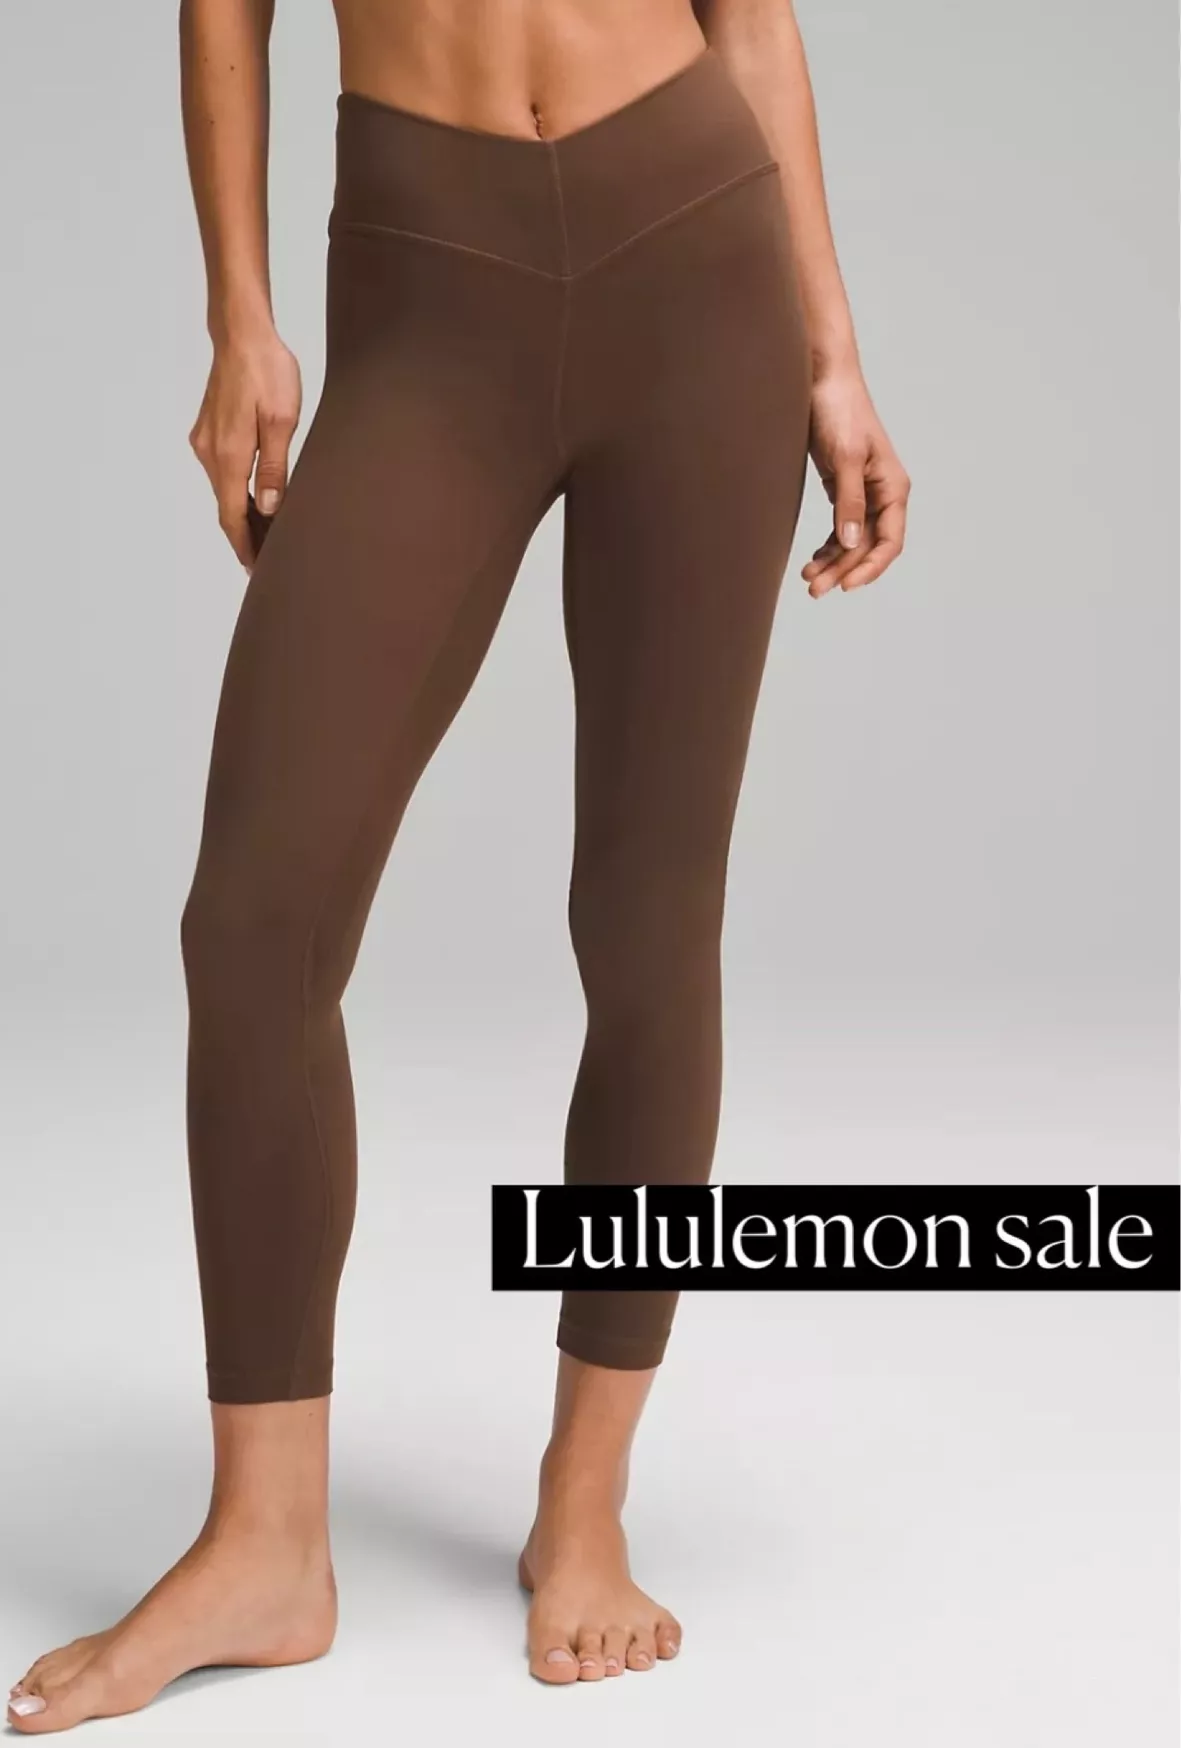 lululemon Align™ Low-Rise Pant 25